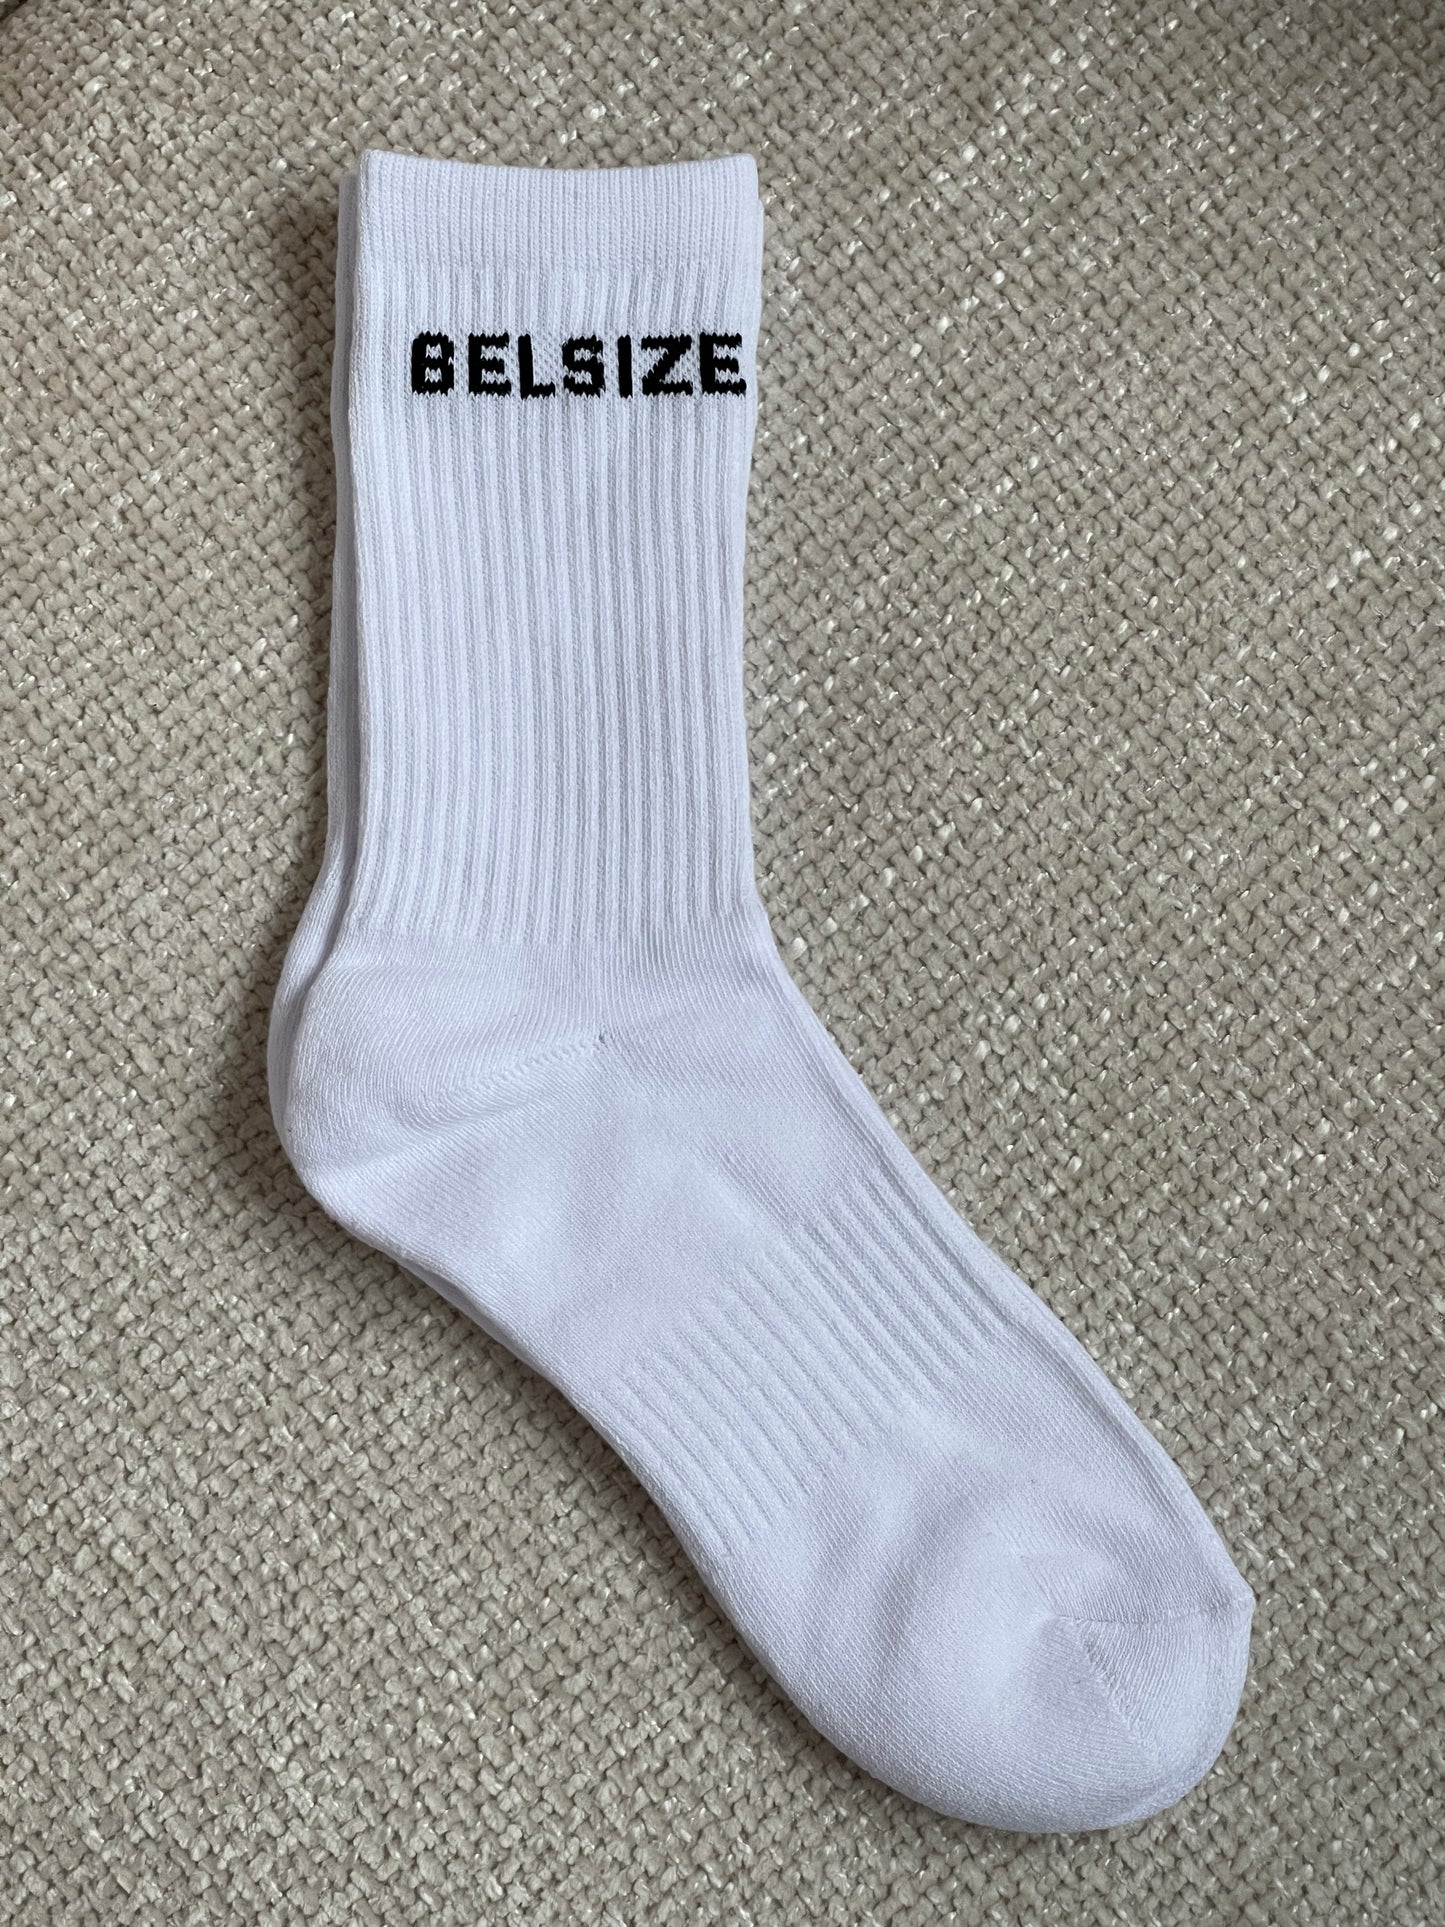 Belsize socks